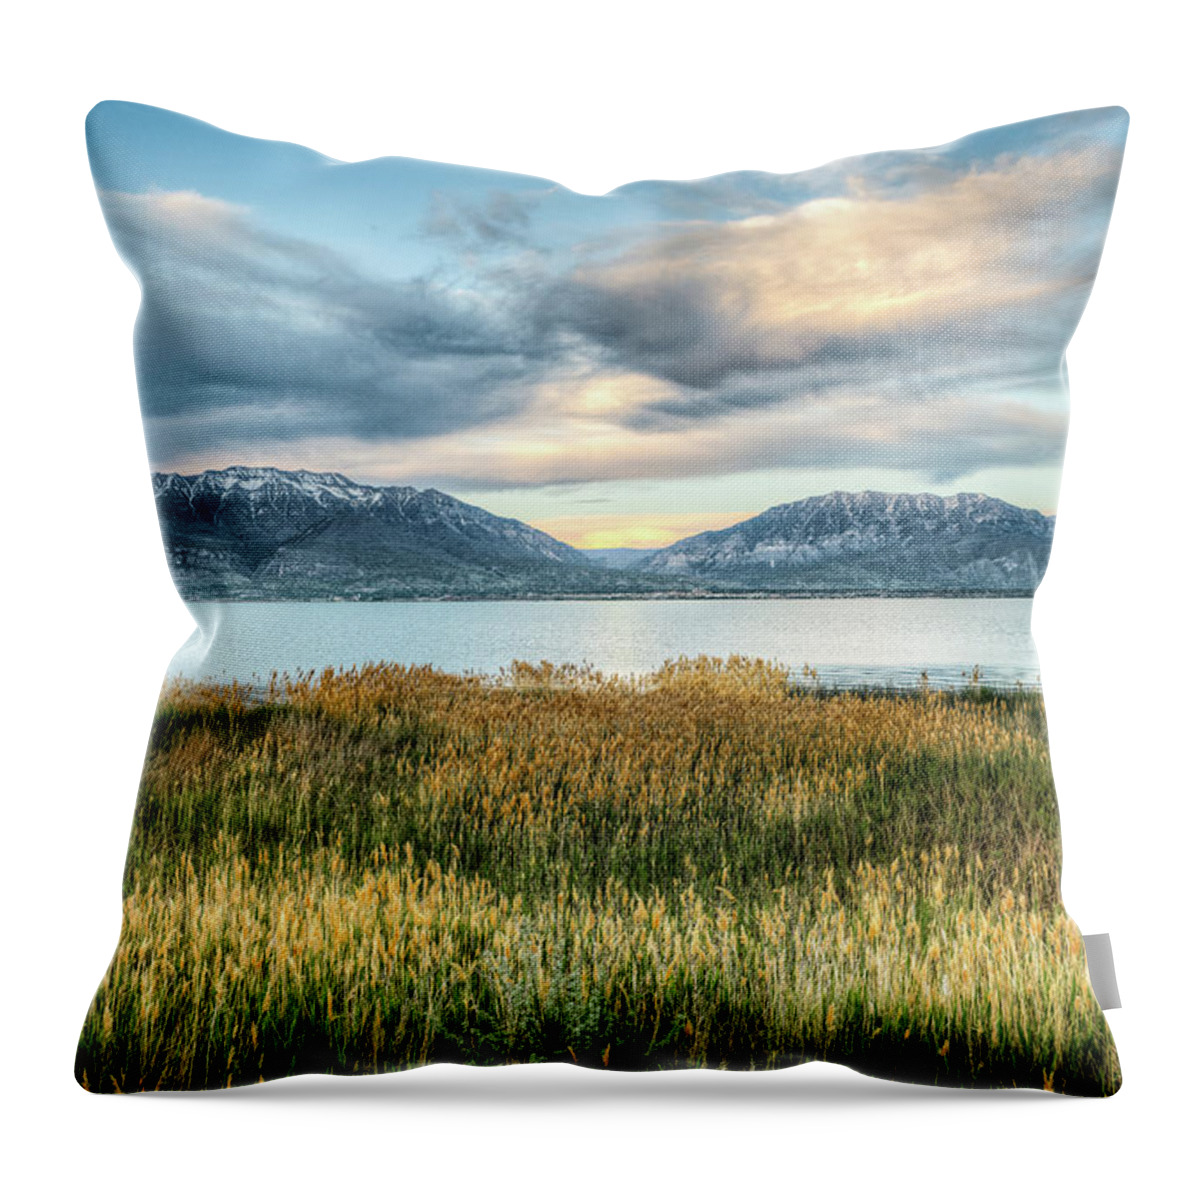 Utah Throw Pillow featuring the photograph Utah Lake by Brett Engle